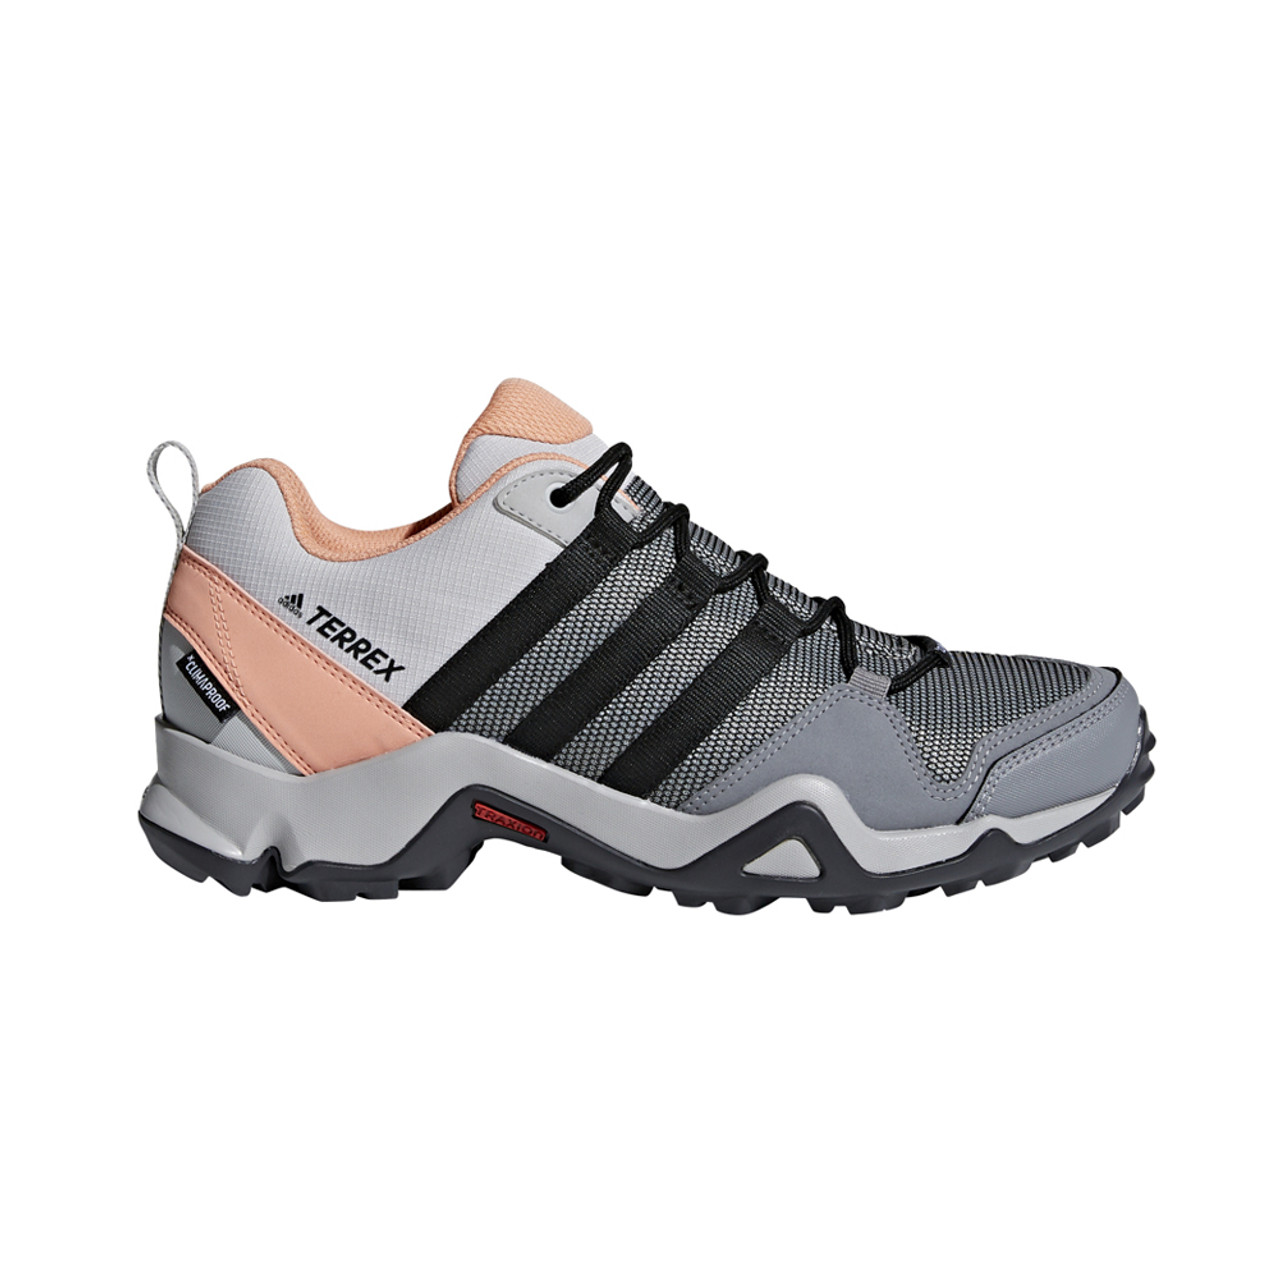 Flock hjemmelevering udtryk New Adidas Women's Terrex AX2 CP Hiking Shoe Grey/Coral 6.5 - Grey  Two/Black/Chalk Coral | Discount Adidas Ladies Athletic Shoe & More -  Shoolu.com | Shoolu.com